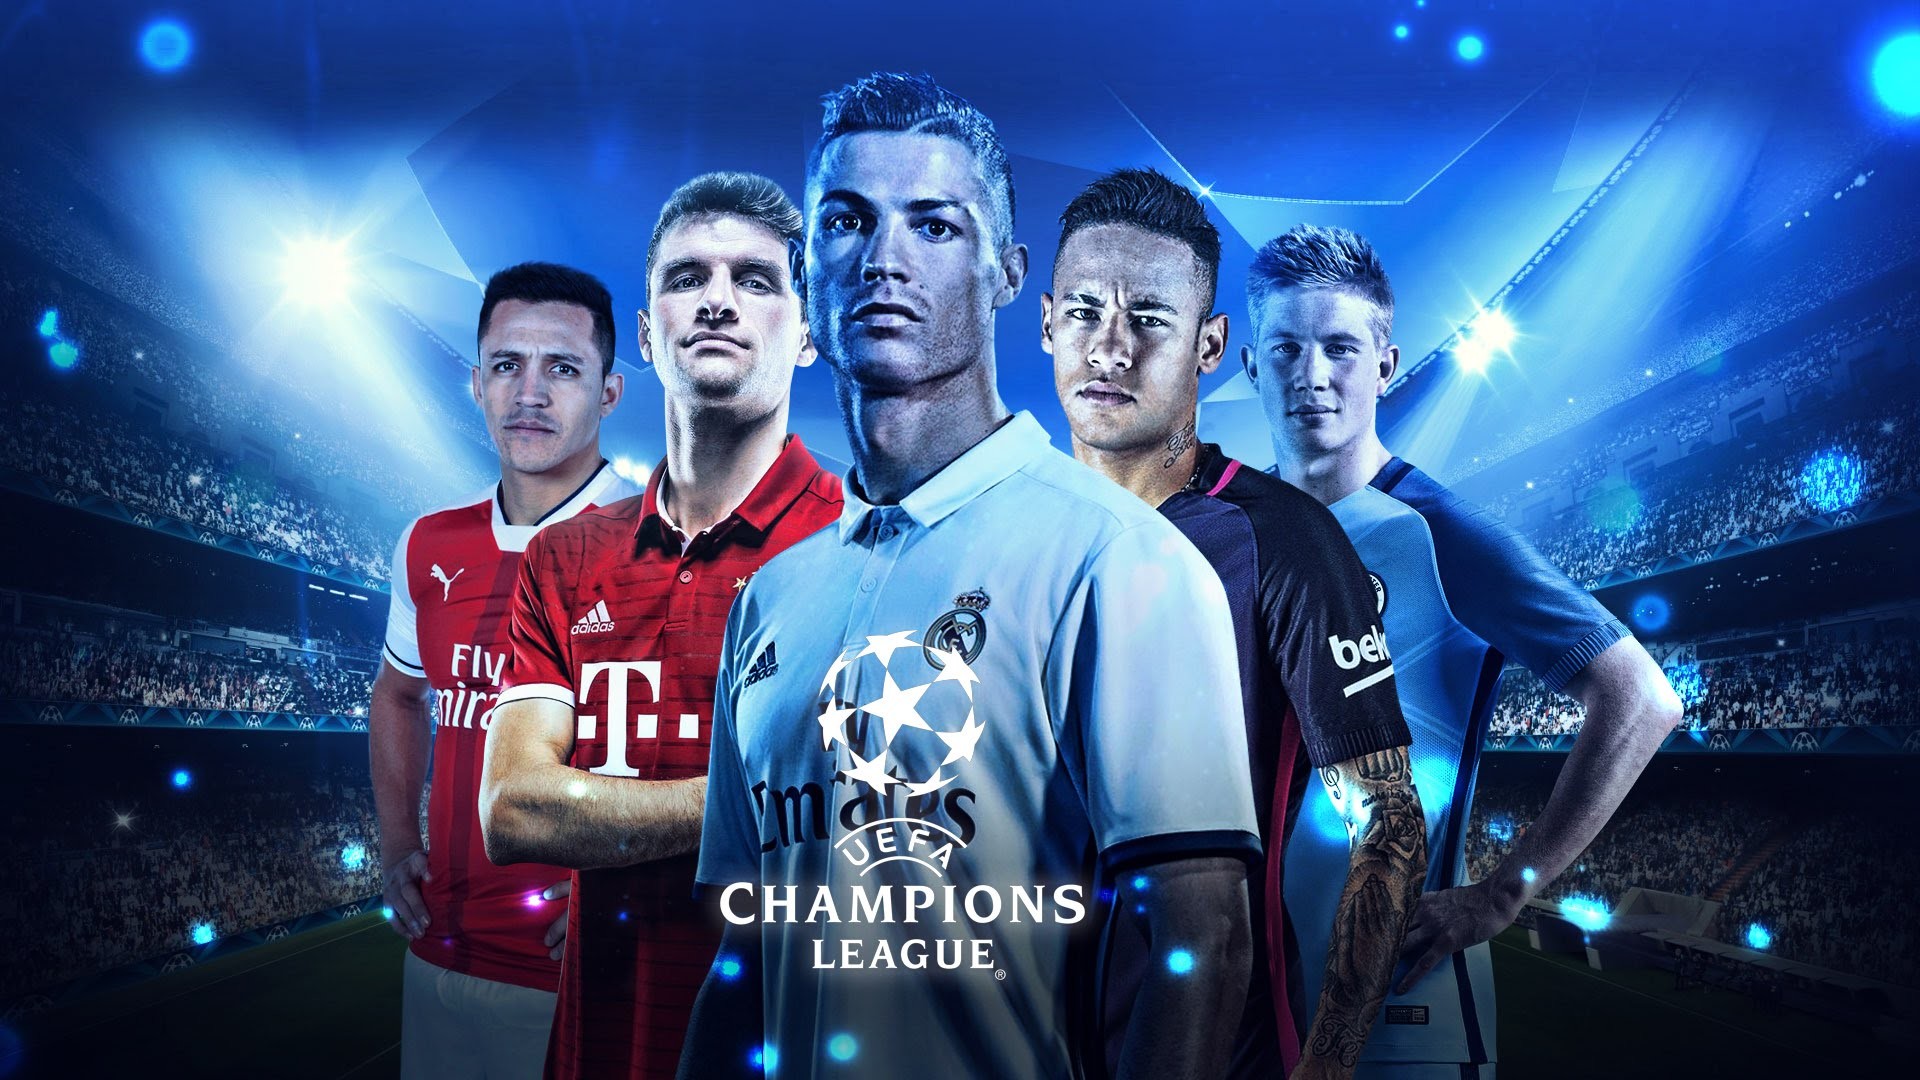 Champions League Wallpaper Image